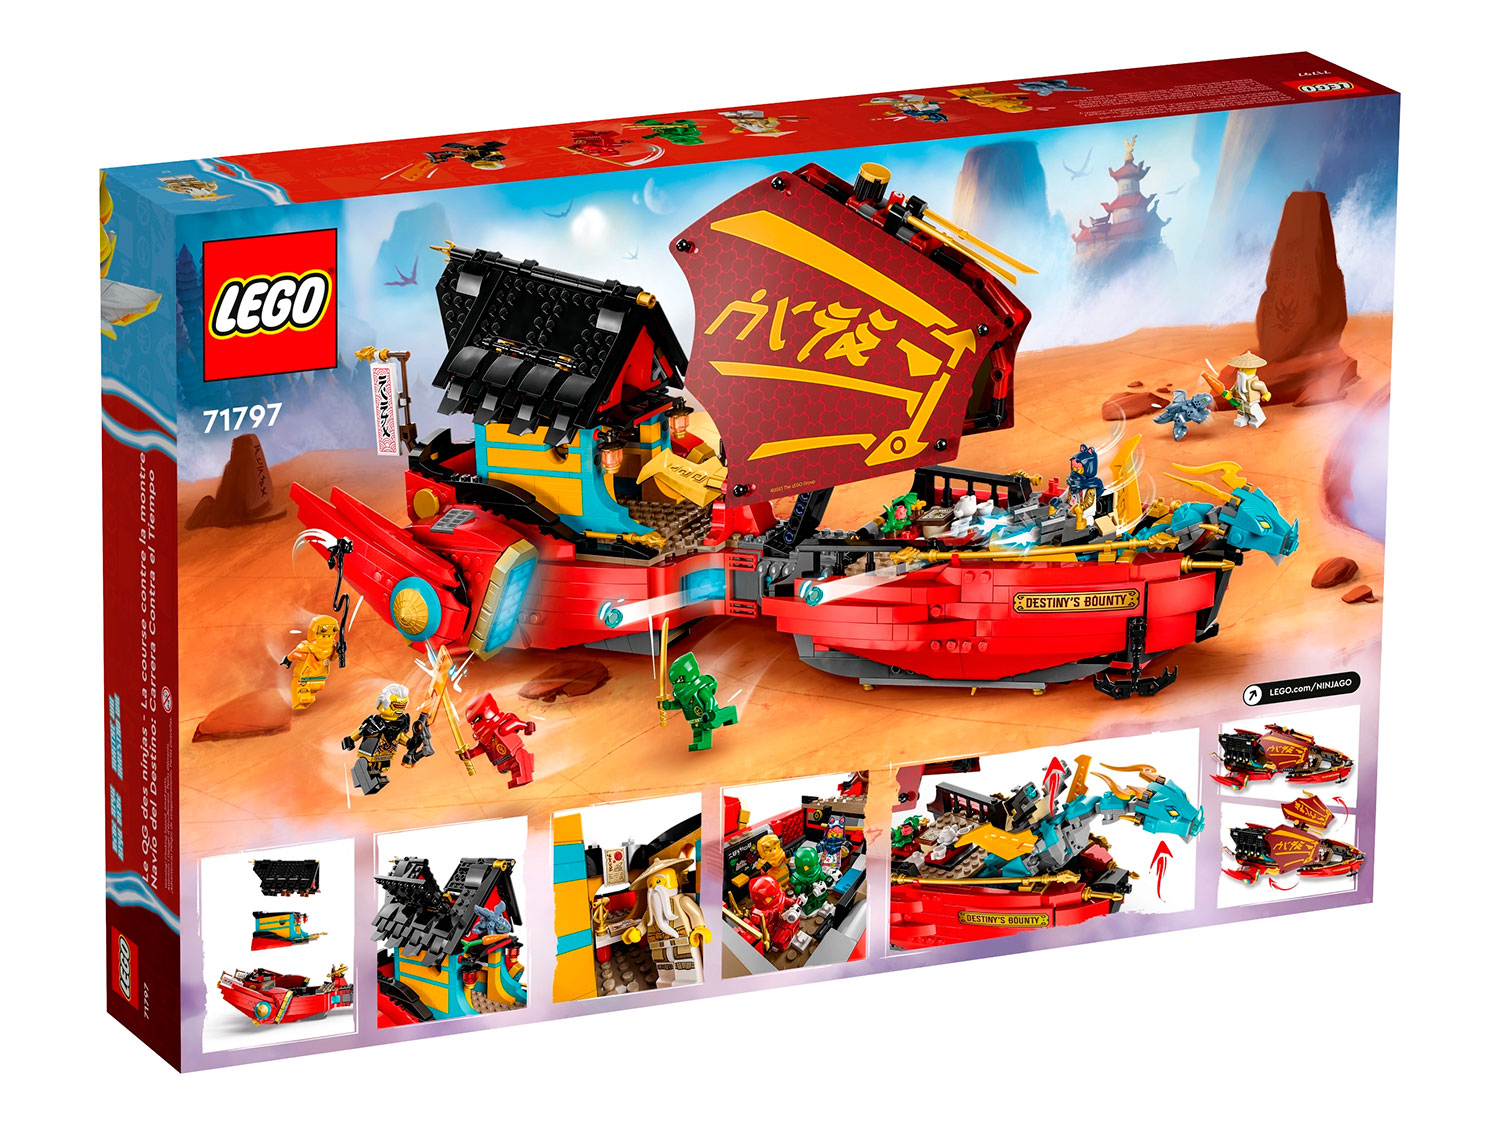 71797 LEGO Ninjago - Награда судьбы — гонка со временем